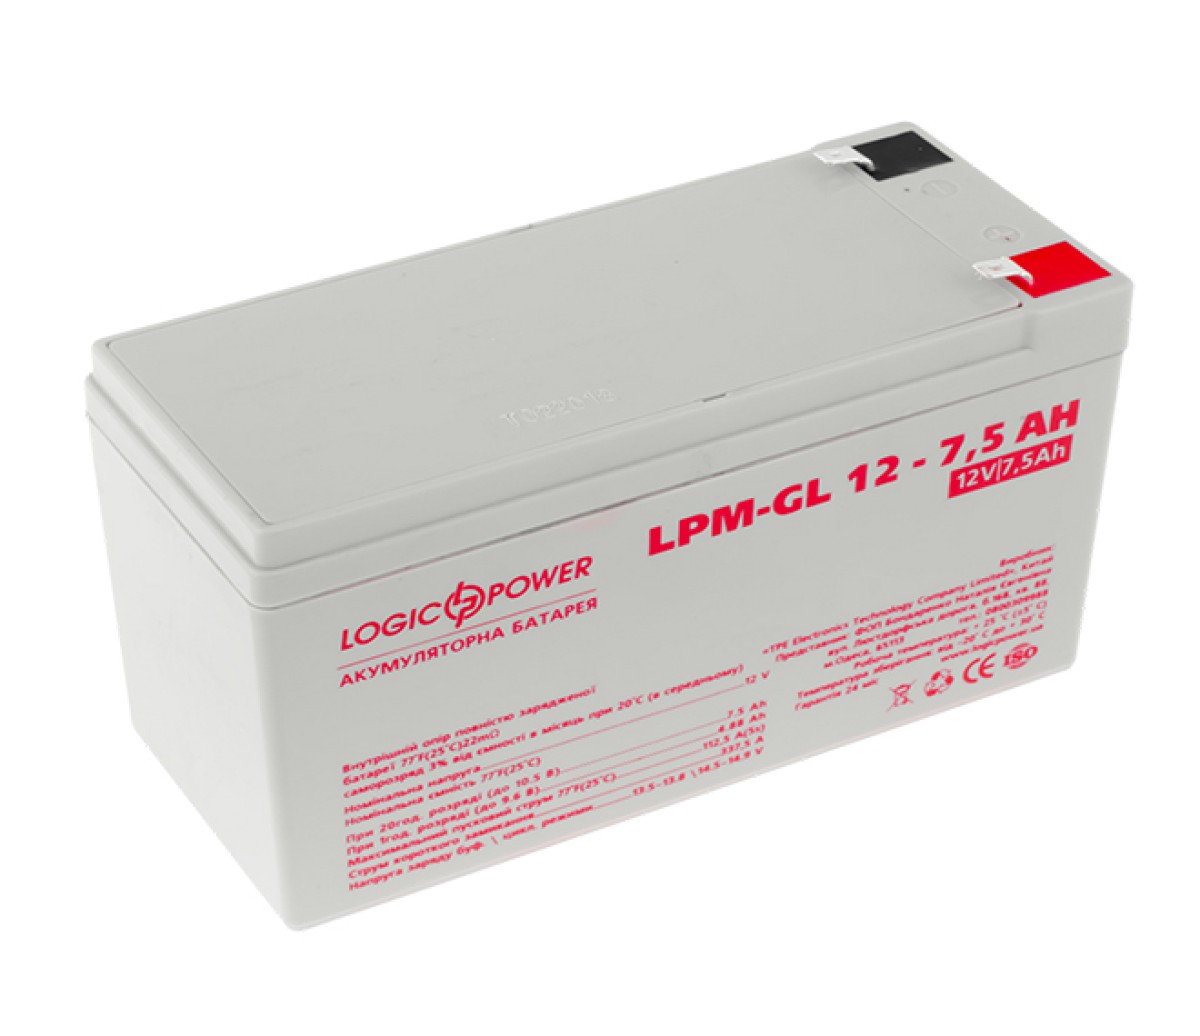 Аккумулятор гелевый LPM-GL 12 - 7,5 AH - фото 1